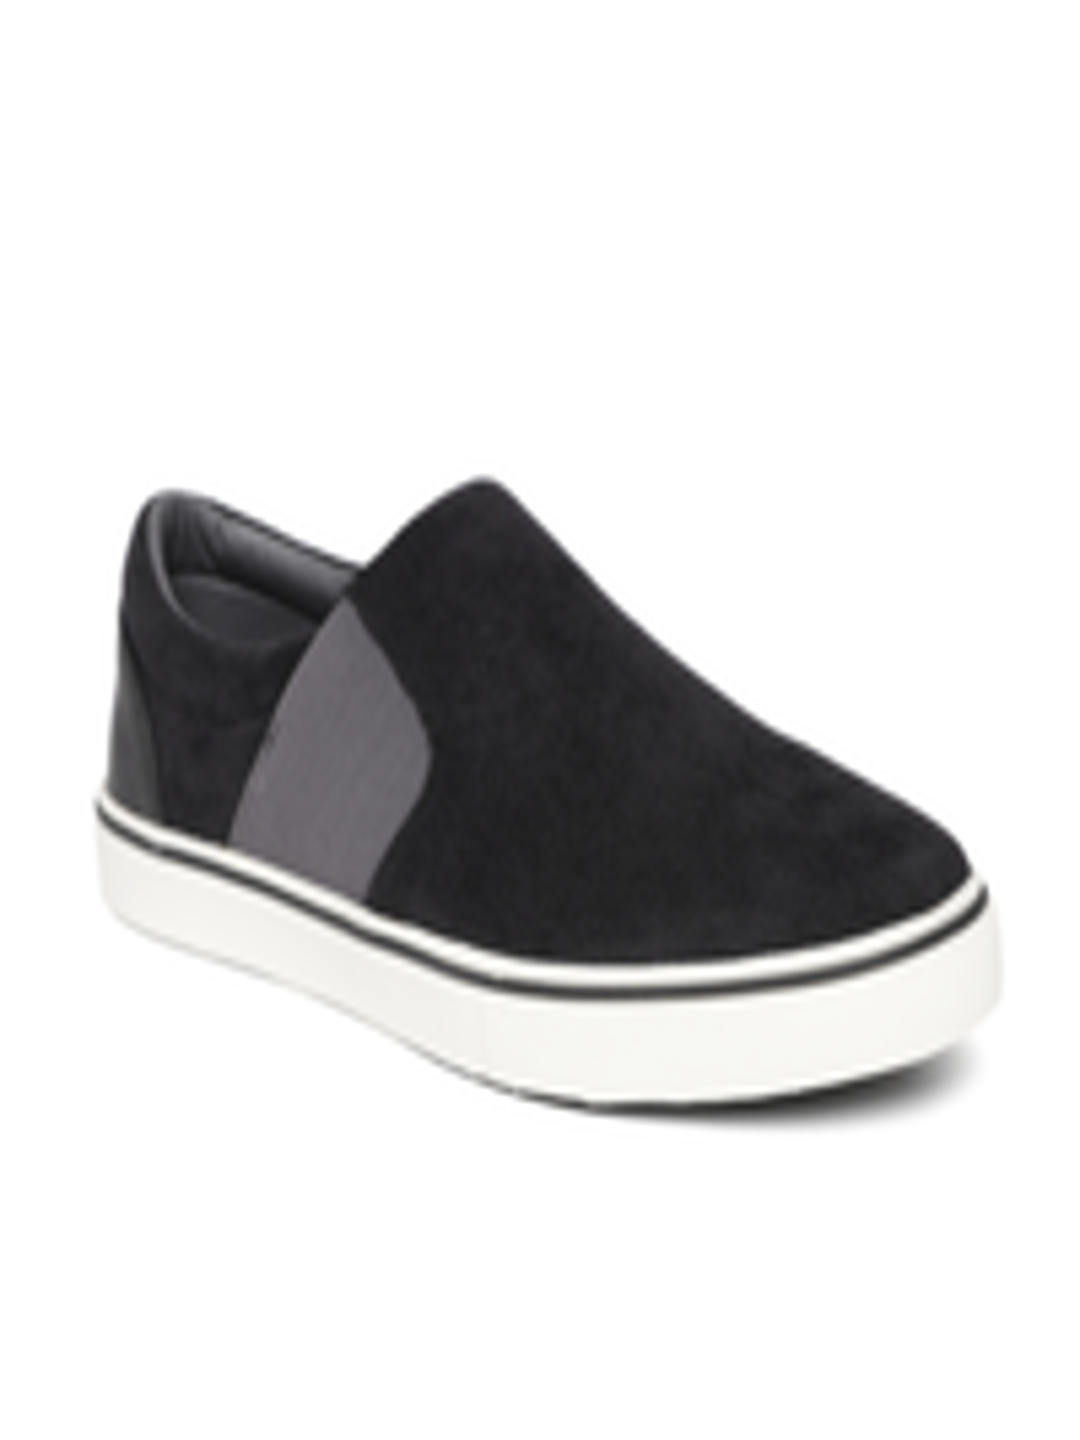 Buy Aeropostale Men Black Slip On Sneakers - Casual Shoes for Men ...